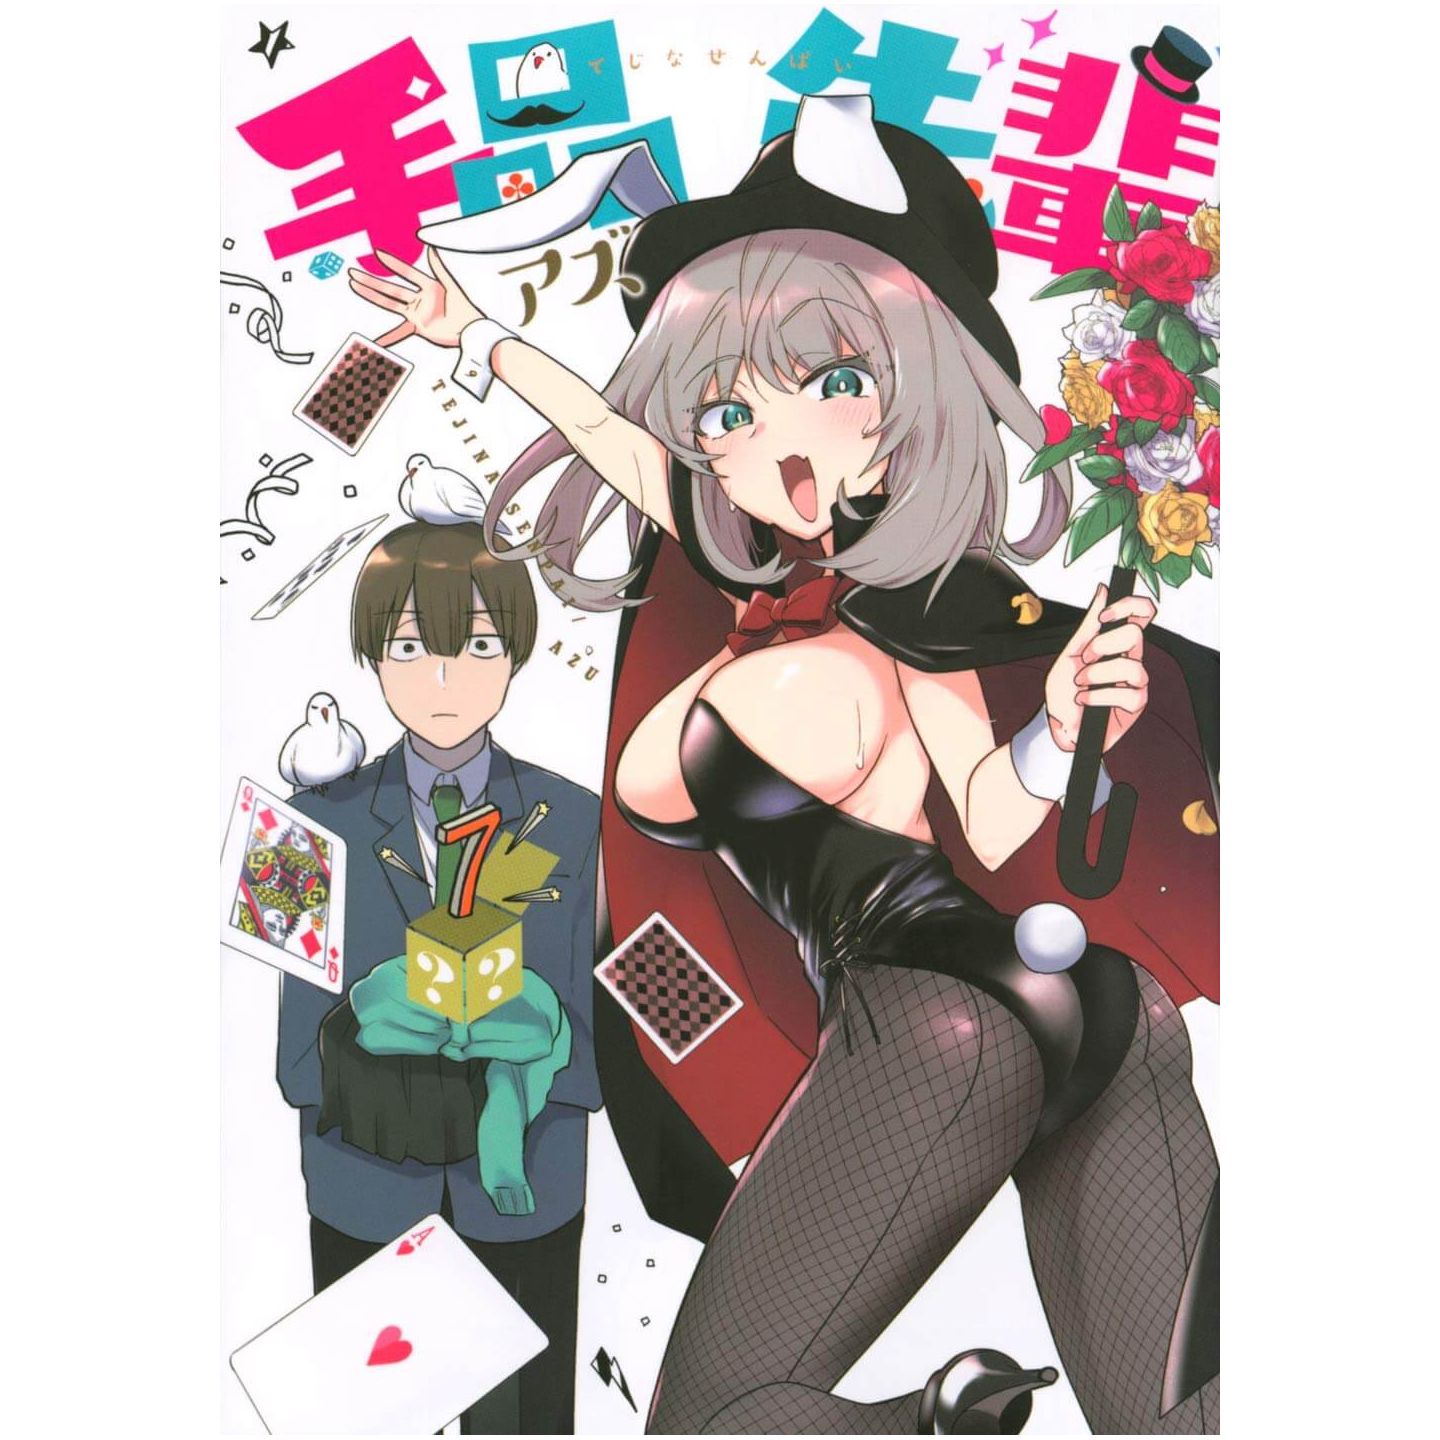 Magical Sempai (Tejina-senpai) - Manga Store 